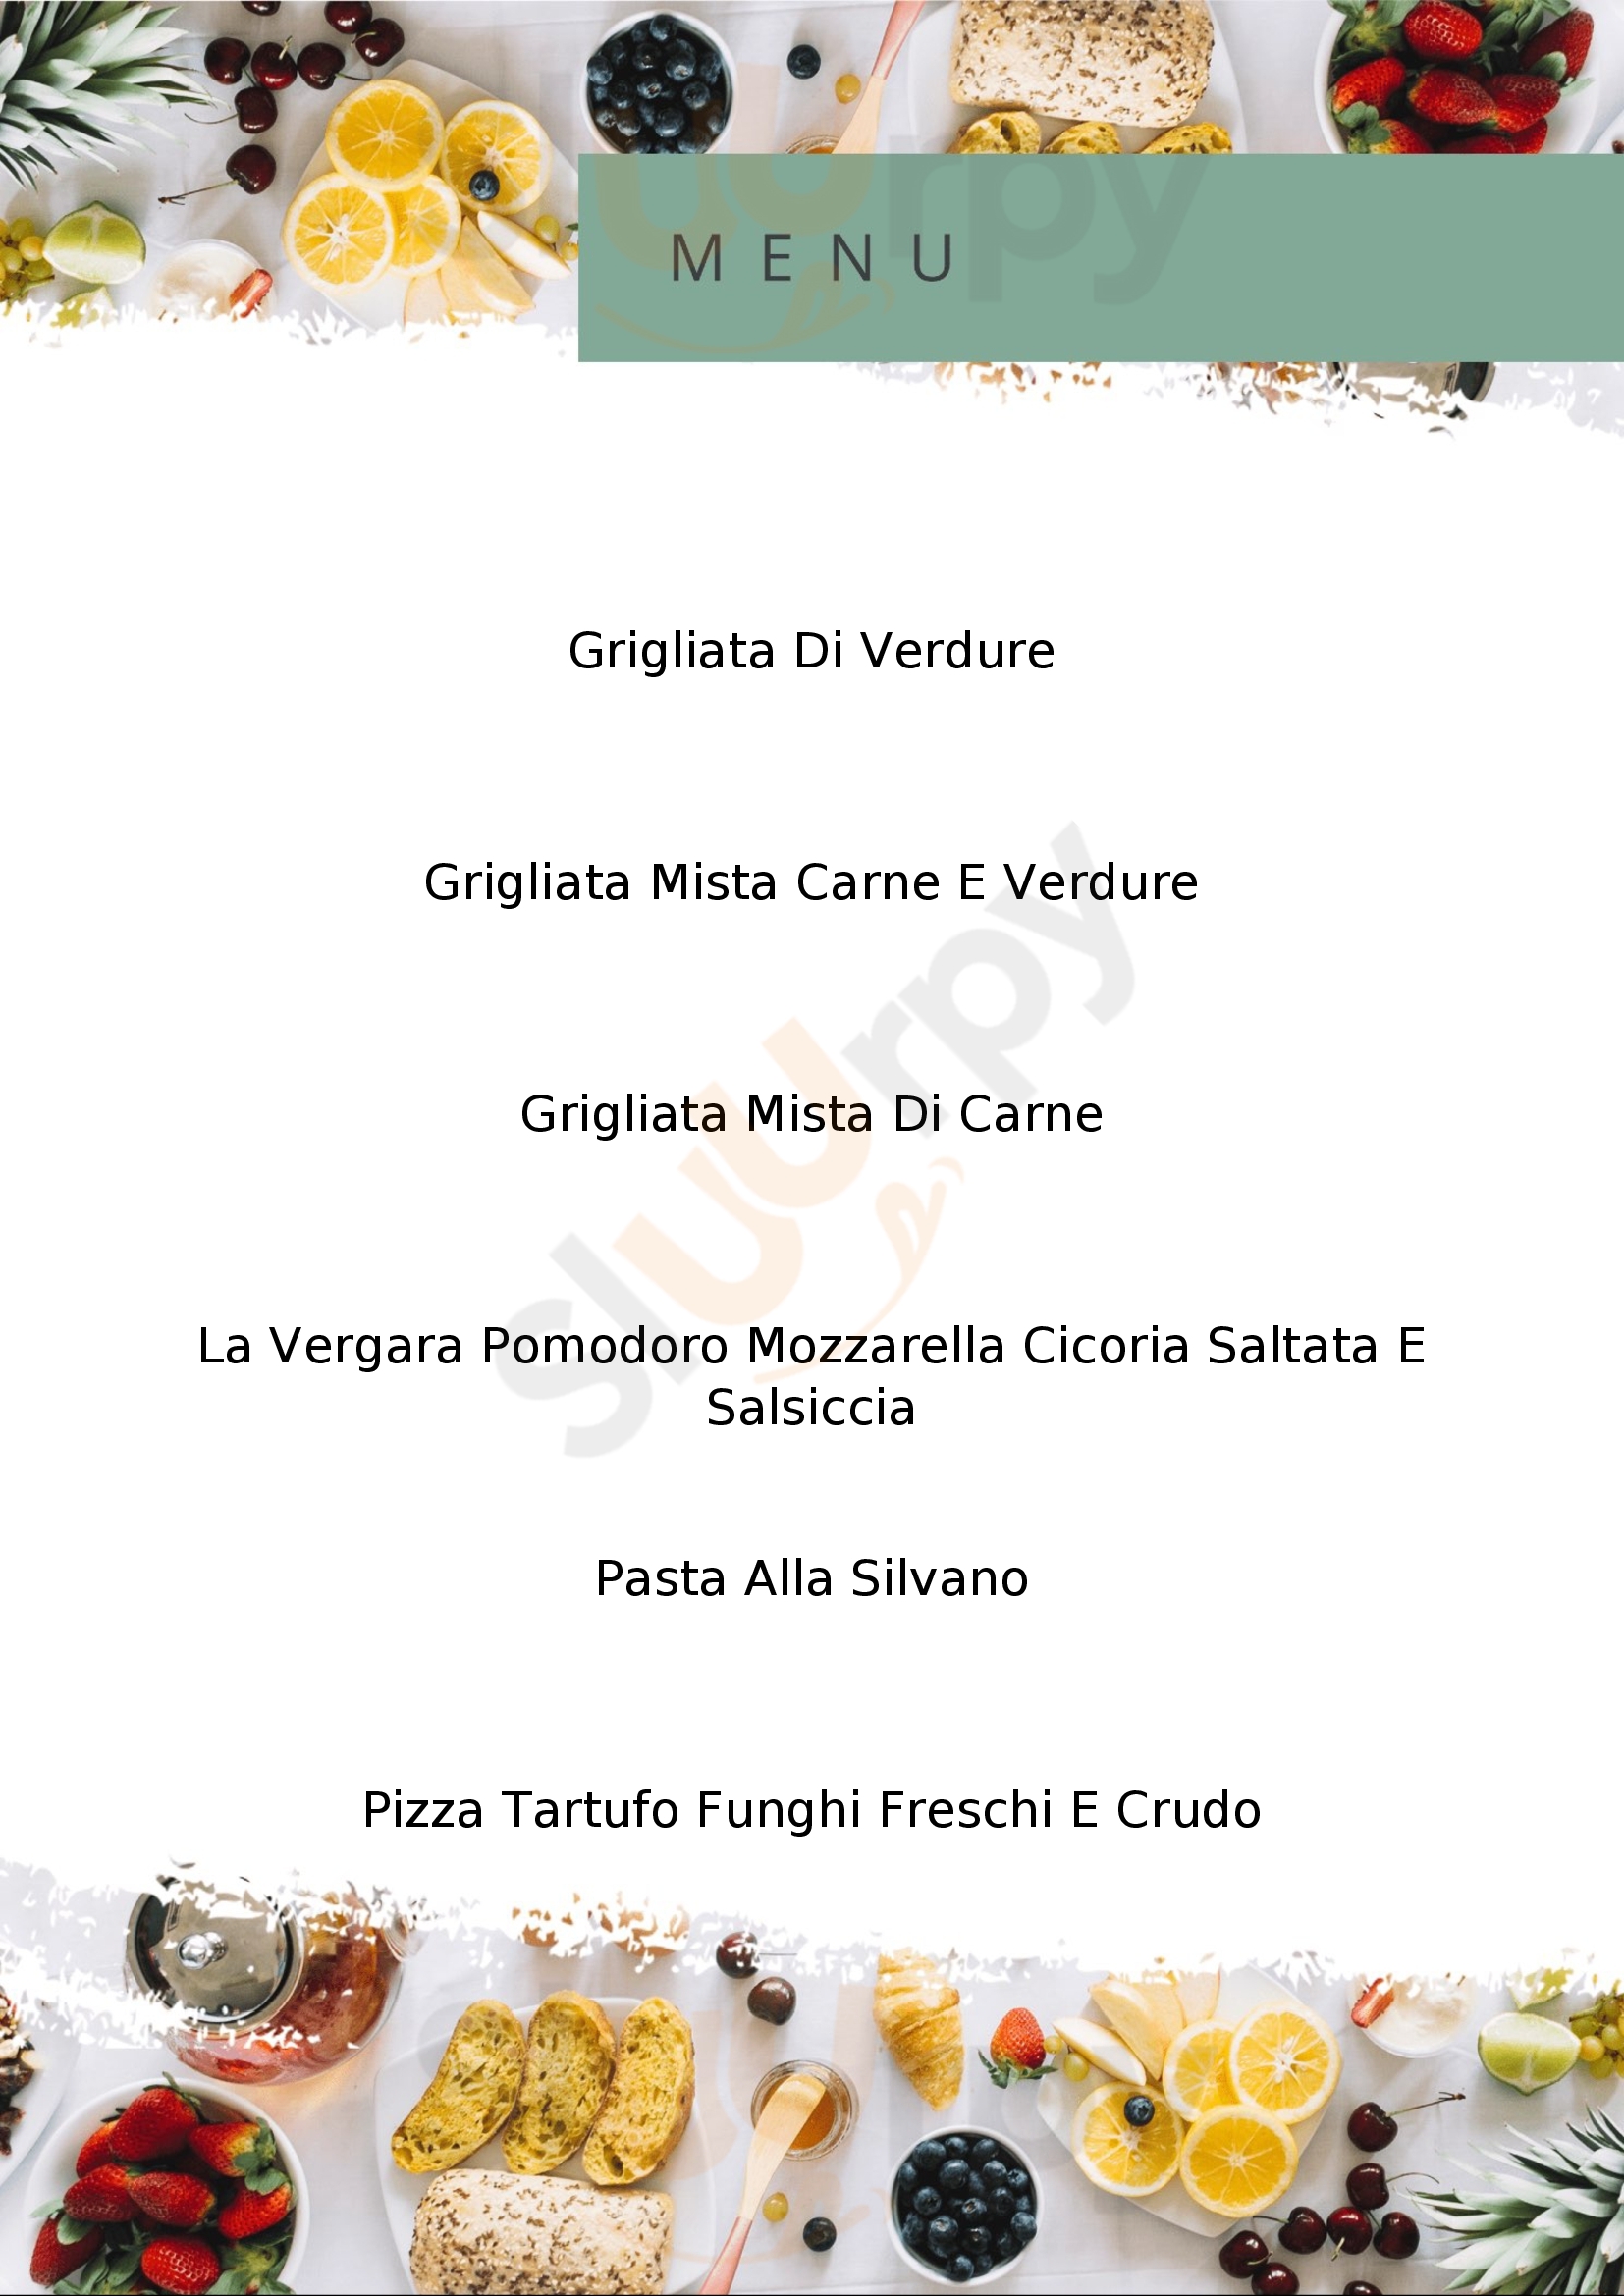 Restaurant Pizzeria 'da Silvano' Macerata menù 1 pagina